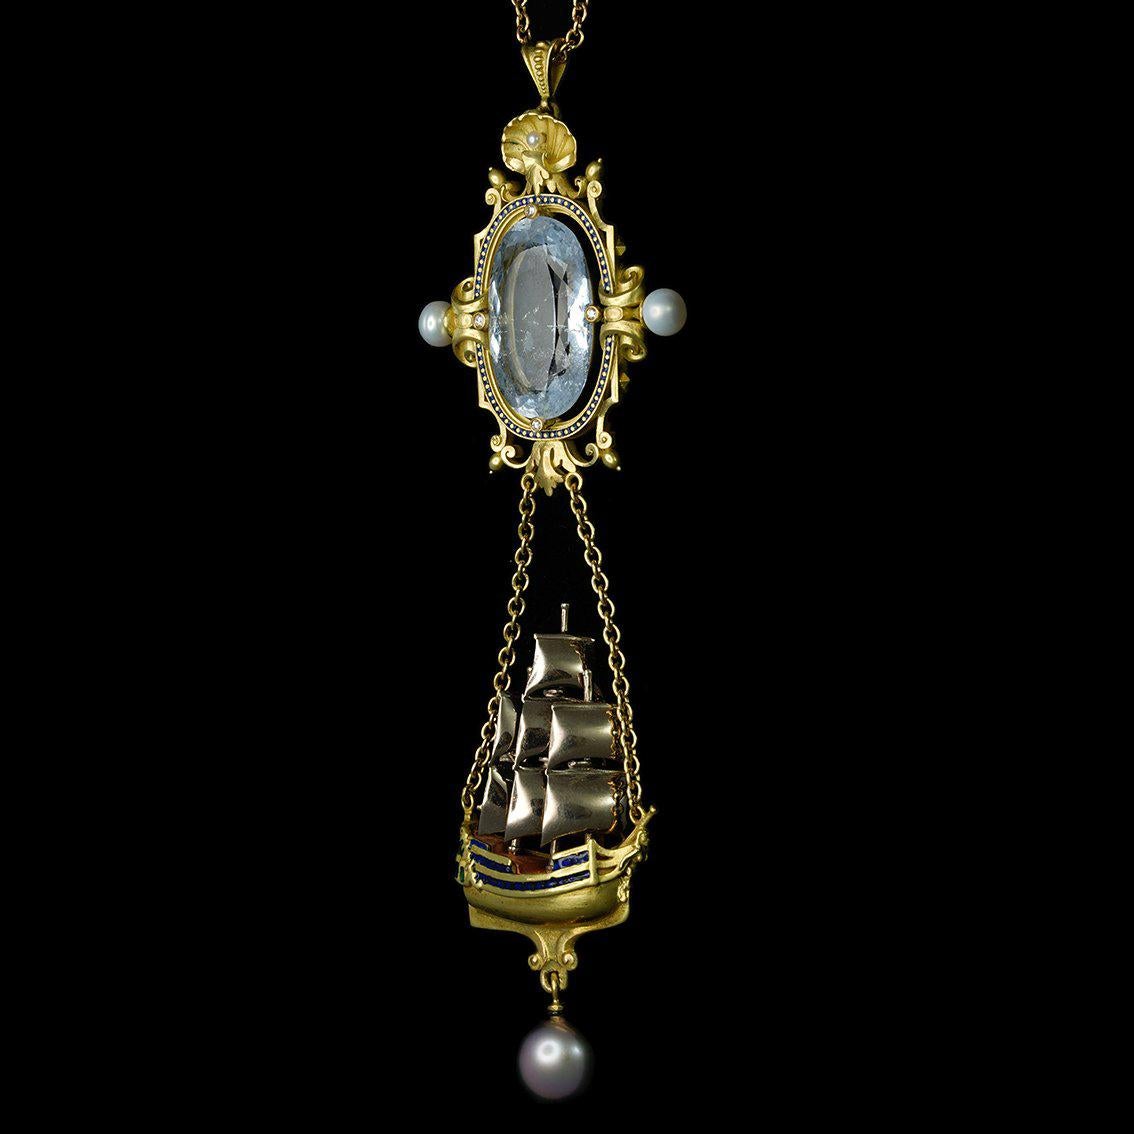 Aquamarine, Diamonds, Pearls, Enamel, 18kt Gold Antique Style Pendant Necklace For Sale 4